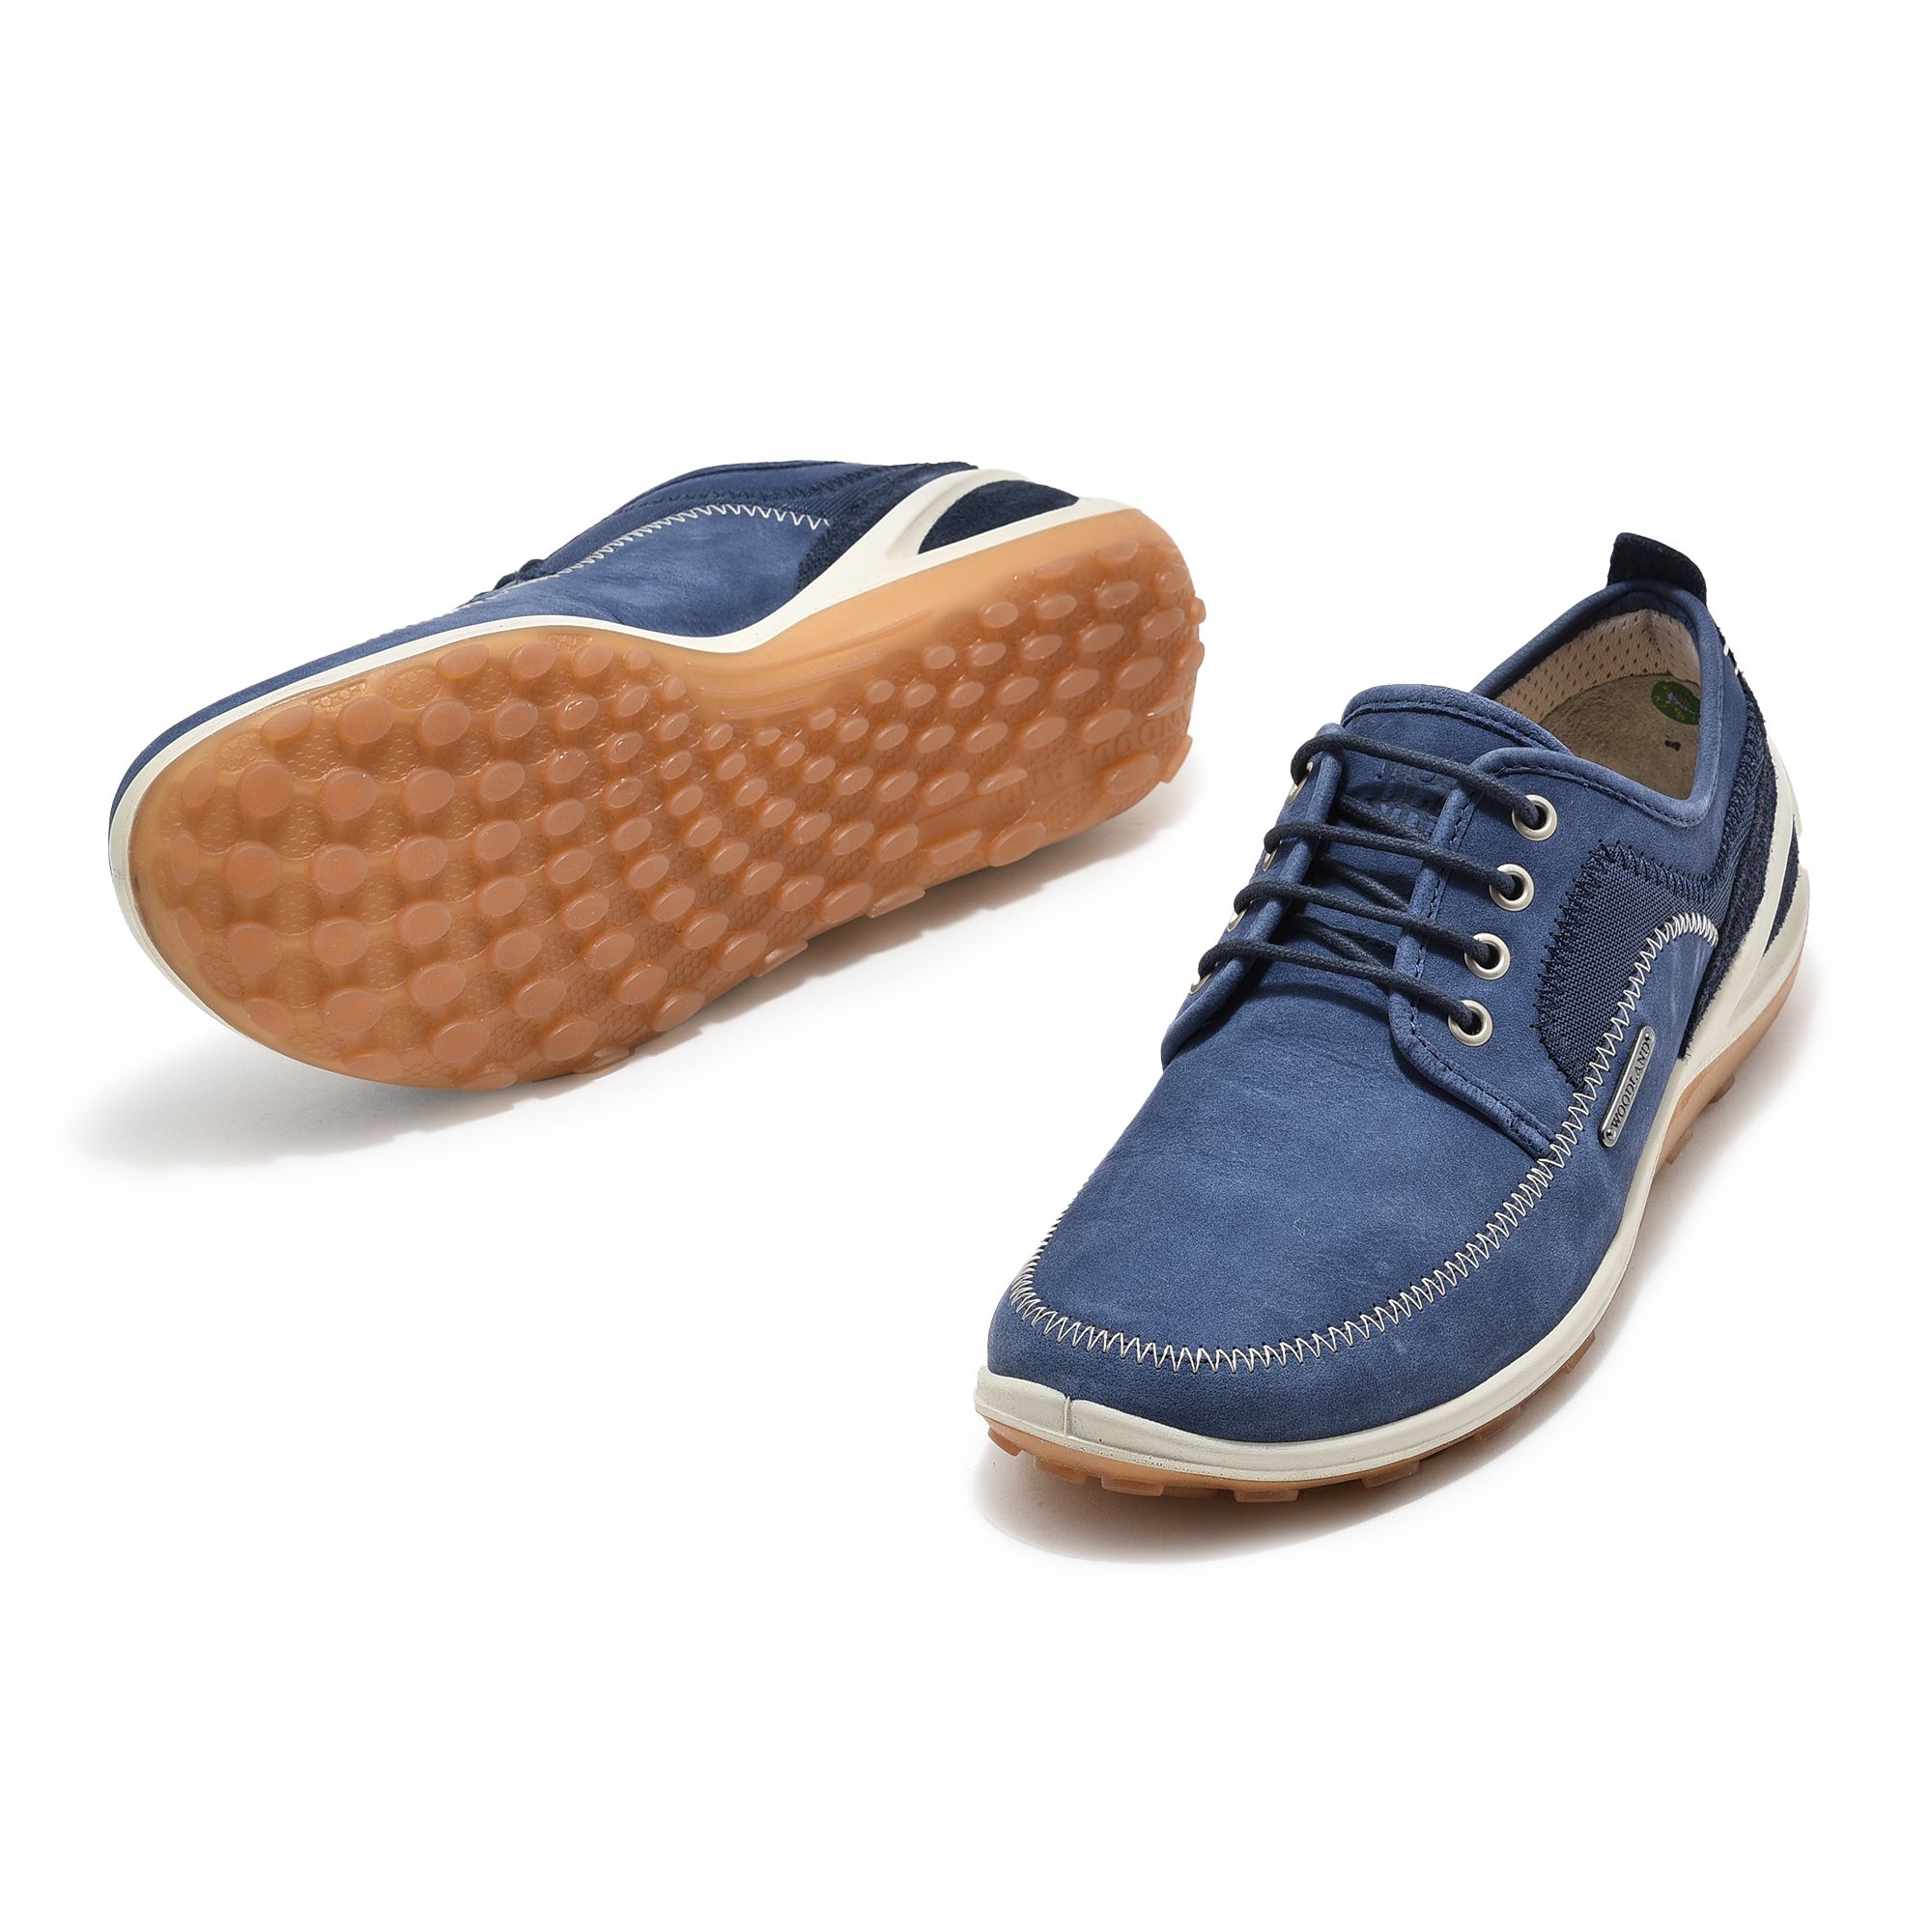 DRoyal blue casual shoes for men